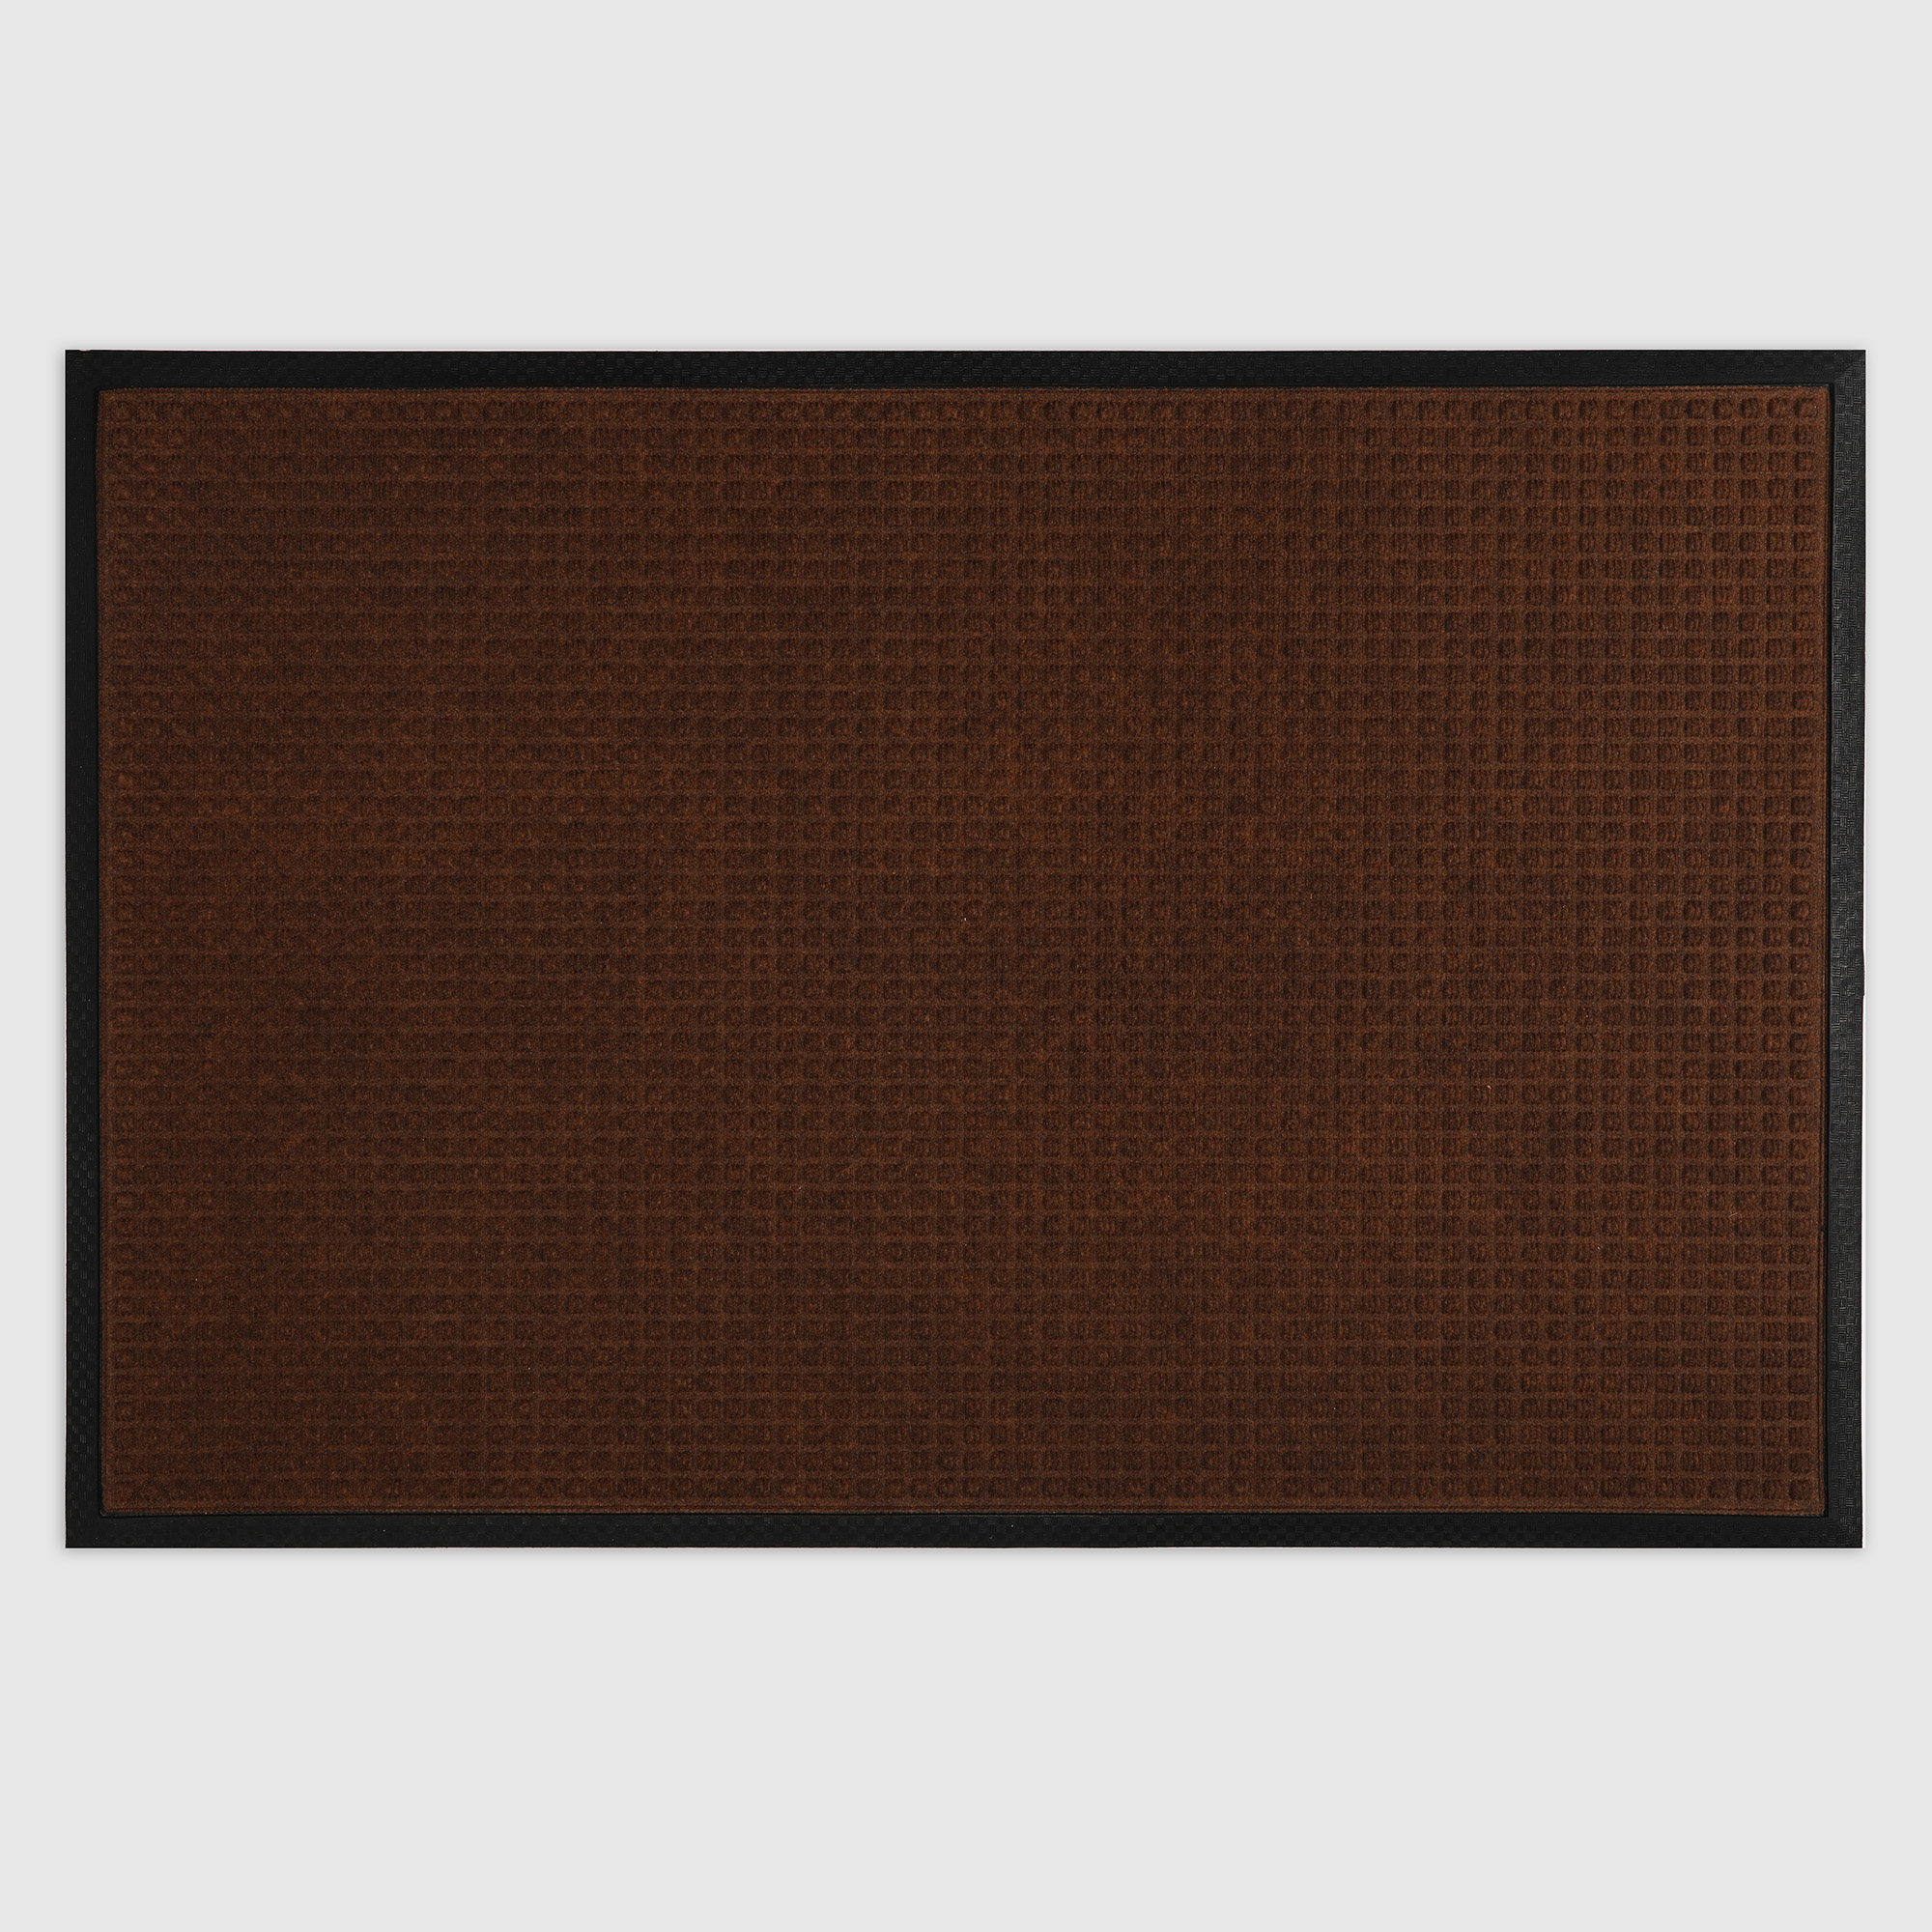 Коврик Jansons Balers коричневый 60х90 см коврик придверный x y carpet faro коричневый 60х90